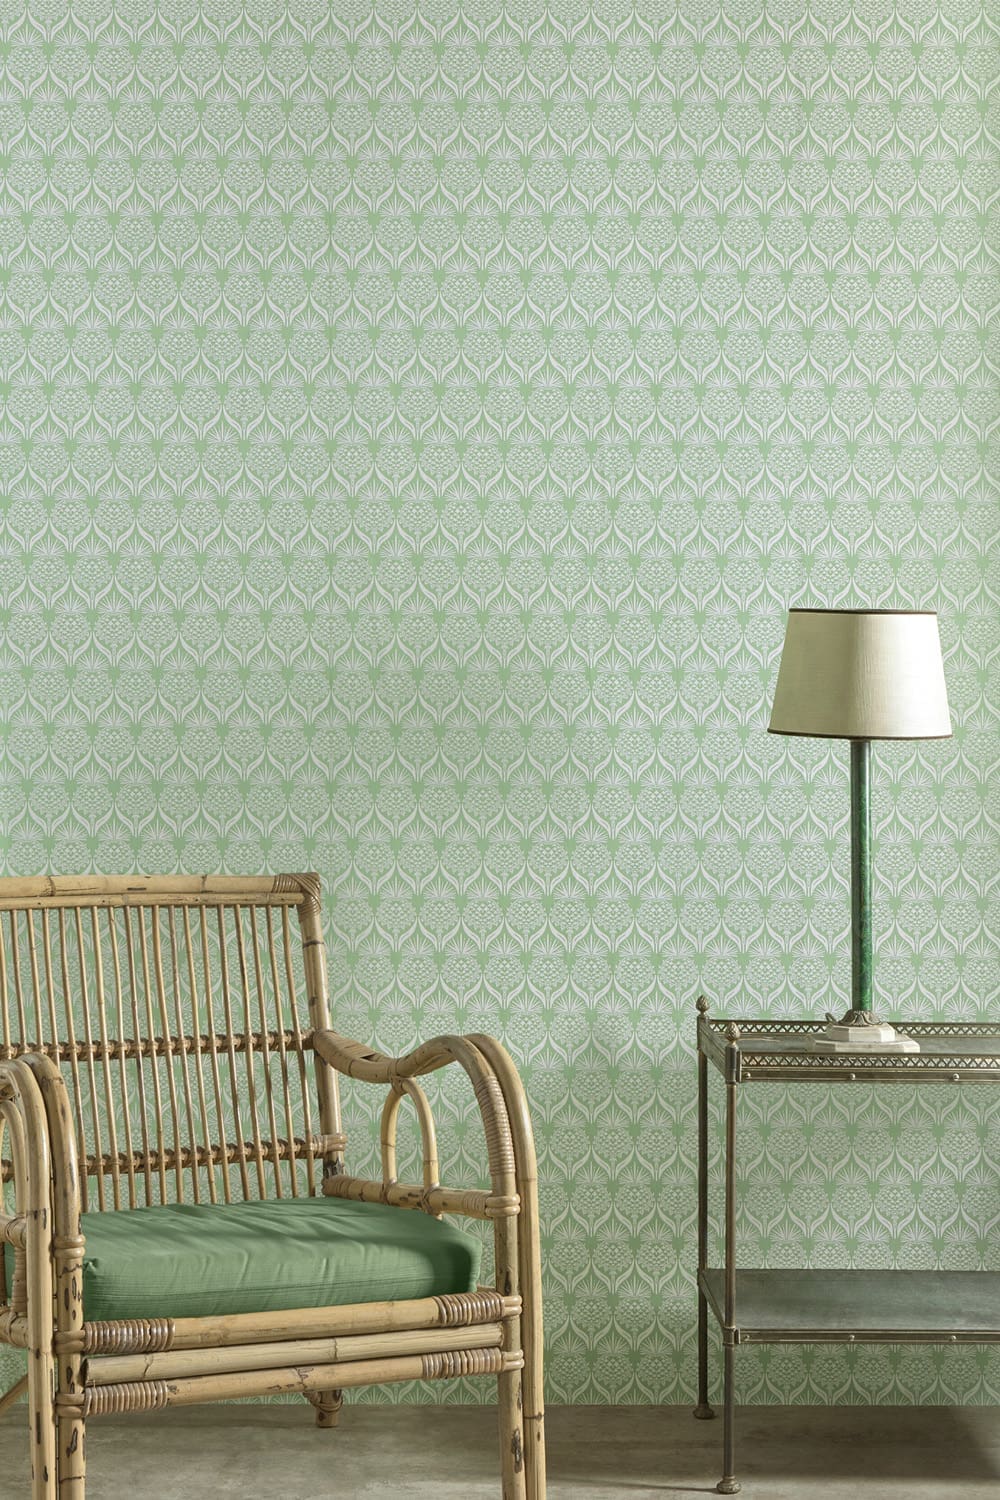 barneby-gates-designer-wallpaper-spring-green-artichoke-wallpaper